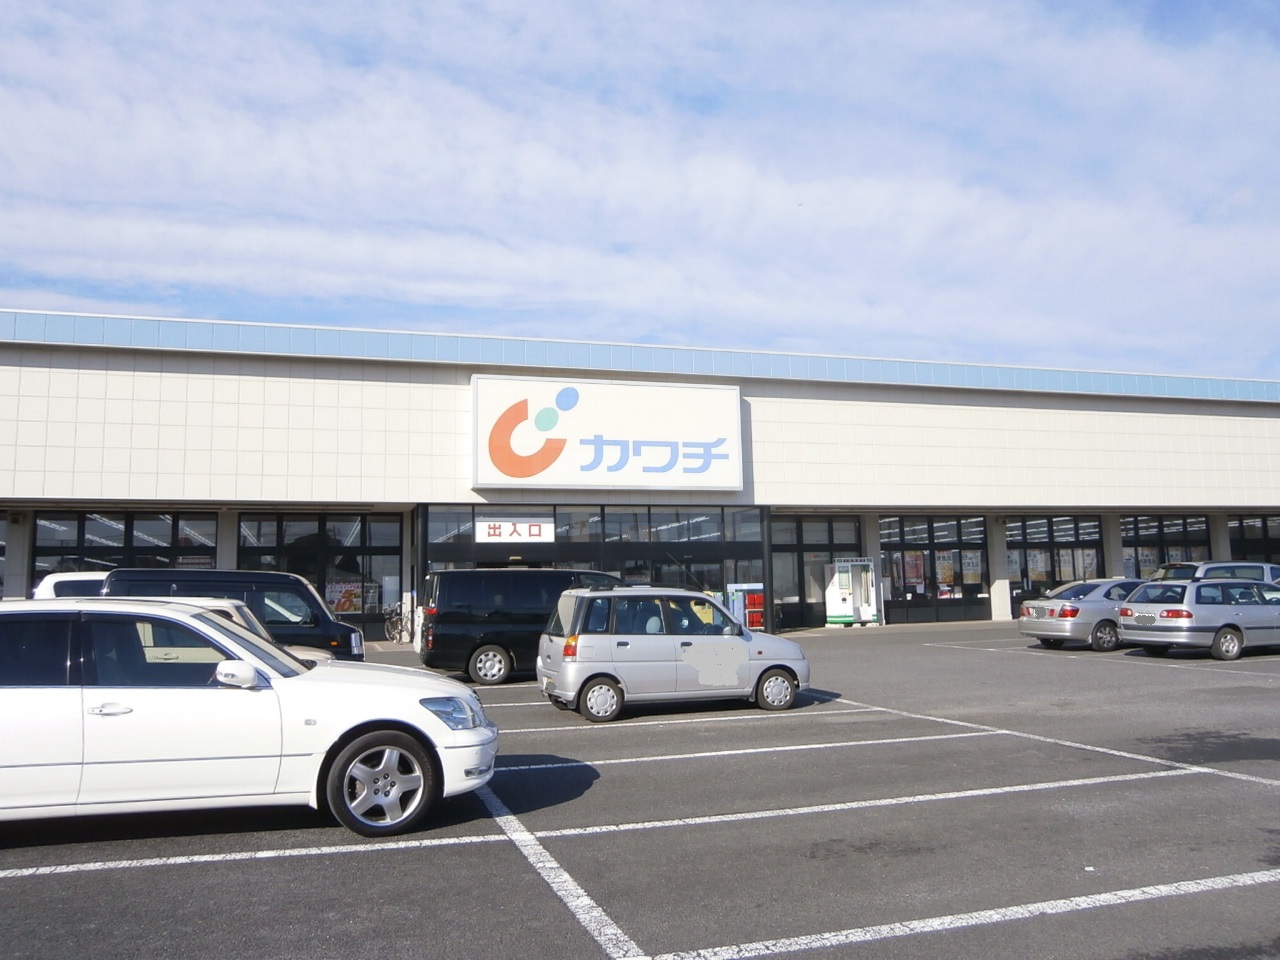 Dorakkusutoa. Kawachii chemicals Kashima shop 2317m until (drugstore)